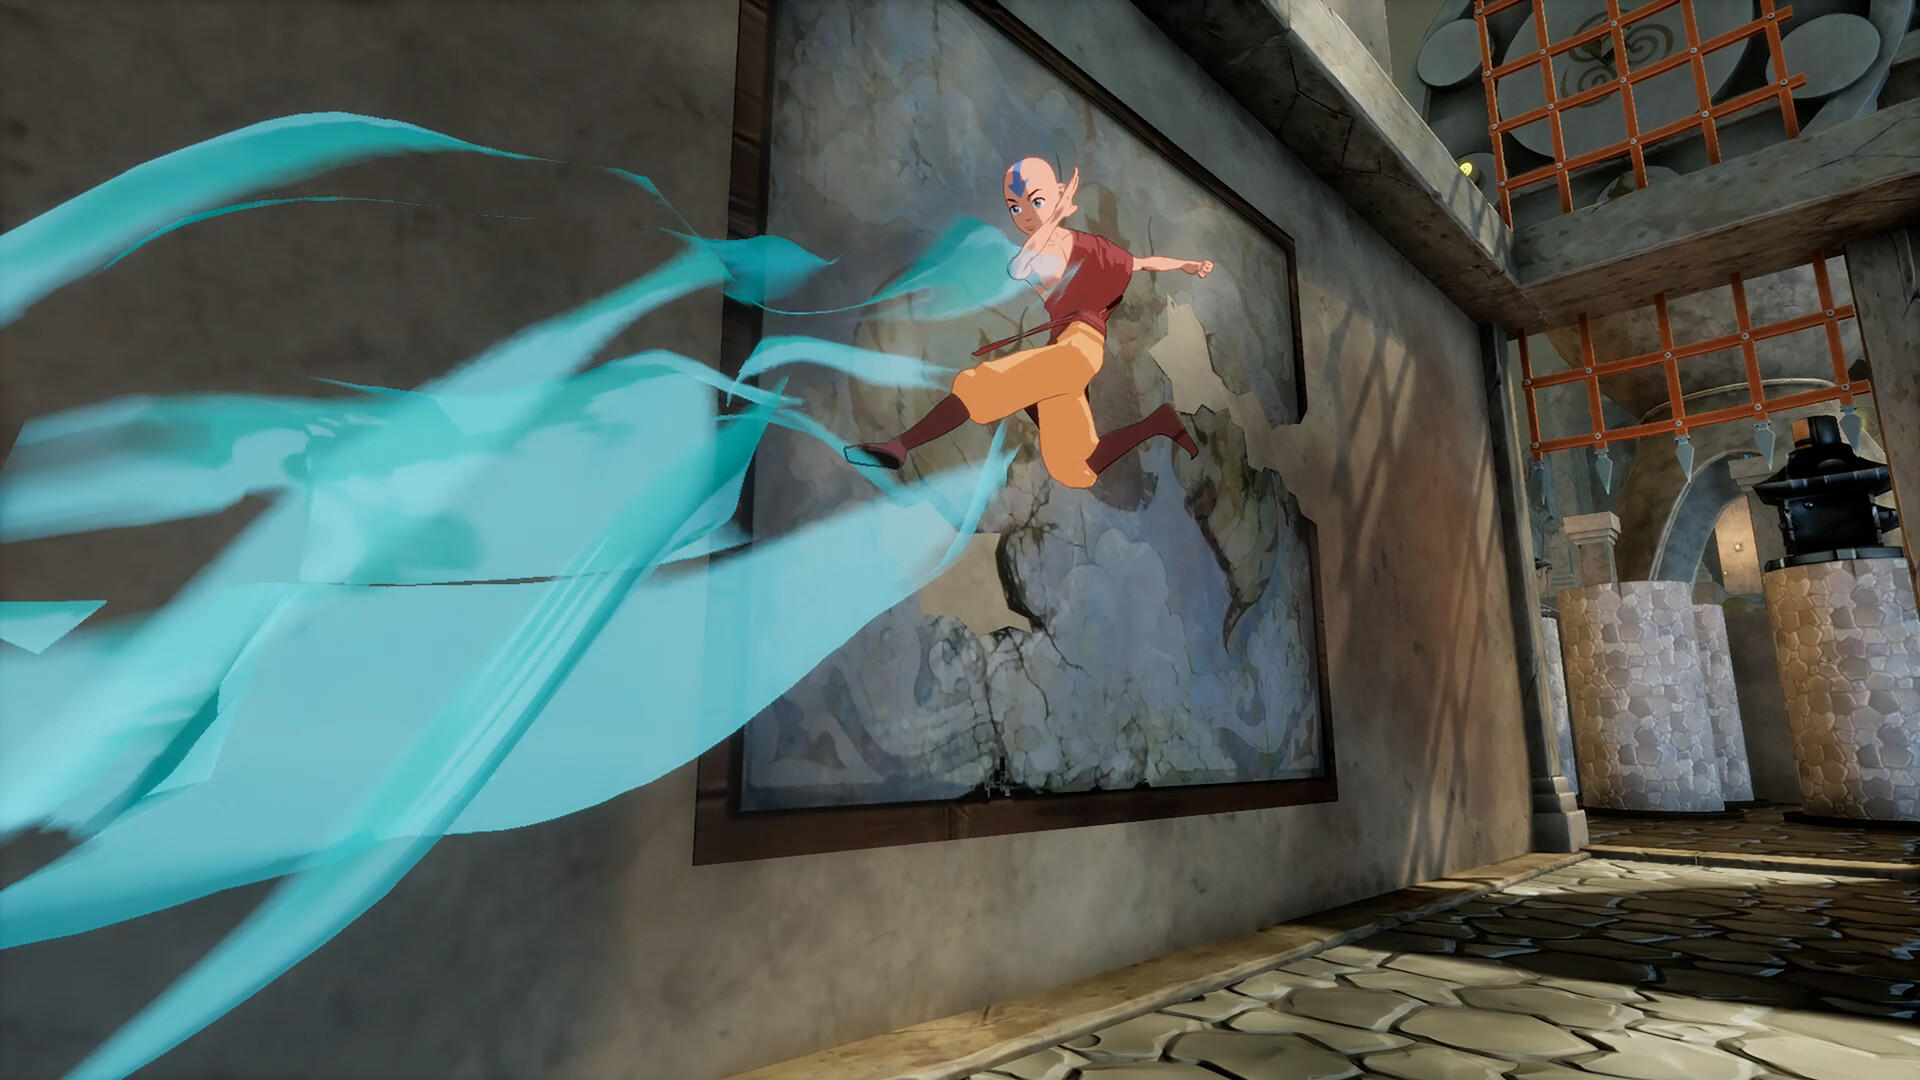 Screenshot 1 of Аватар: Последний маг воздуха - В поисках баланса 